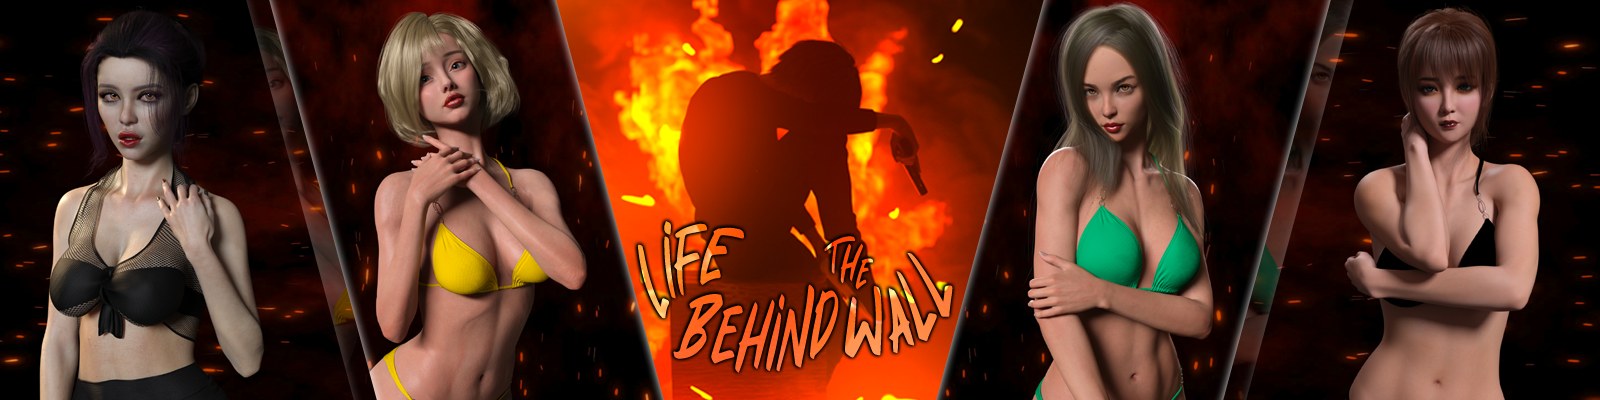 Life Behind The Wall [KarmaStudio] Adult xxx Game Download